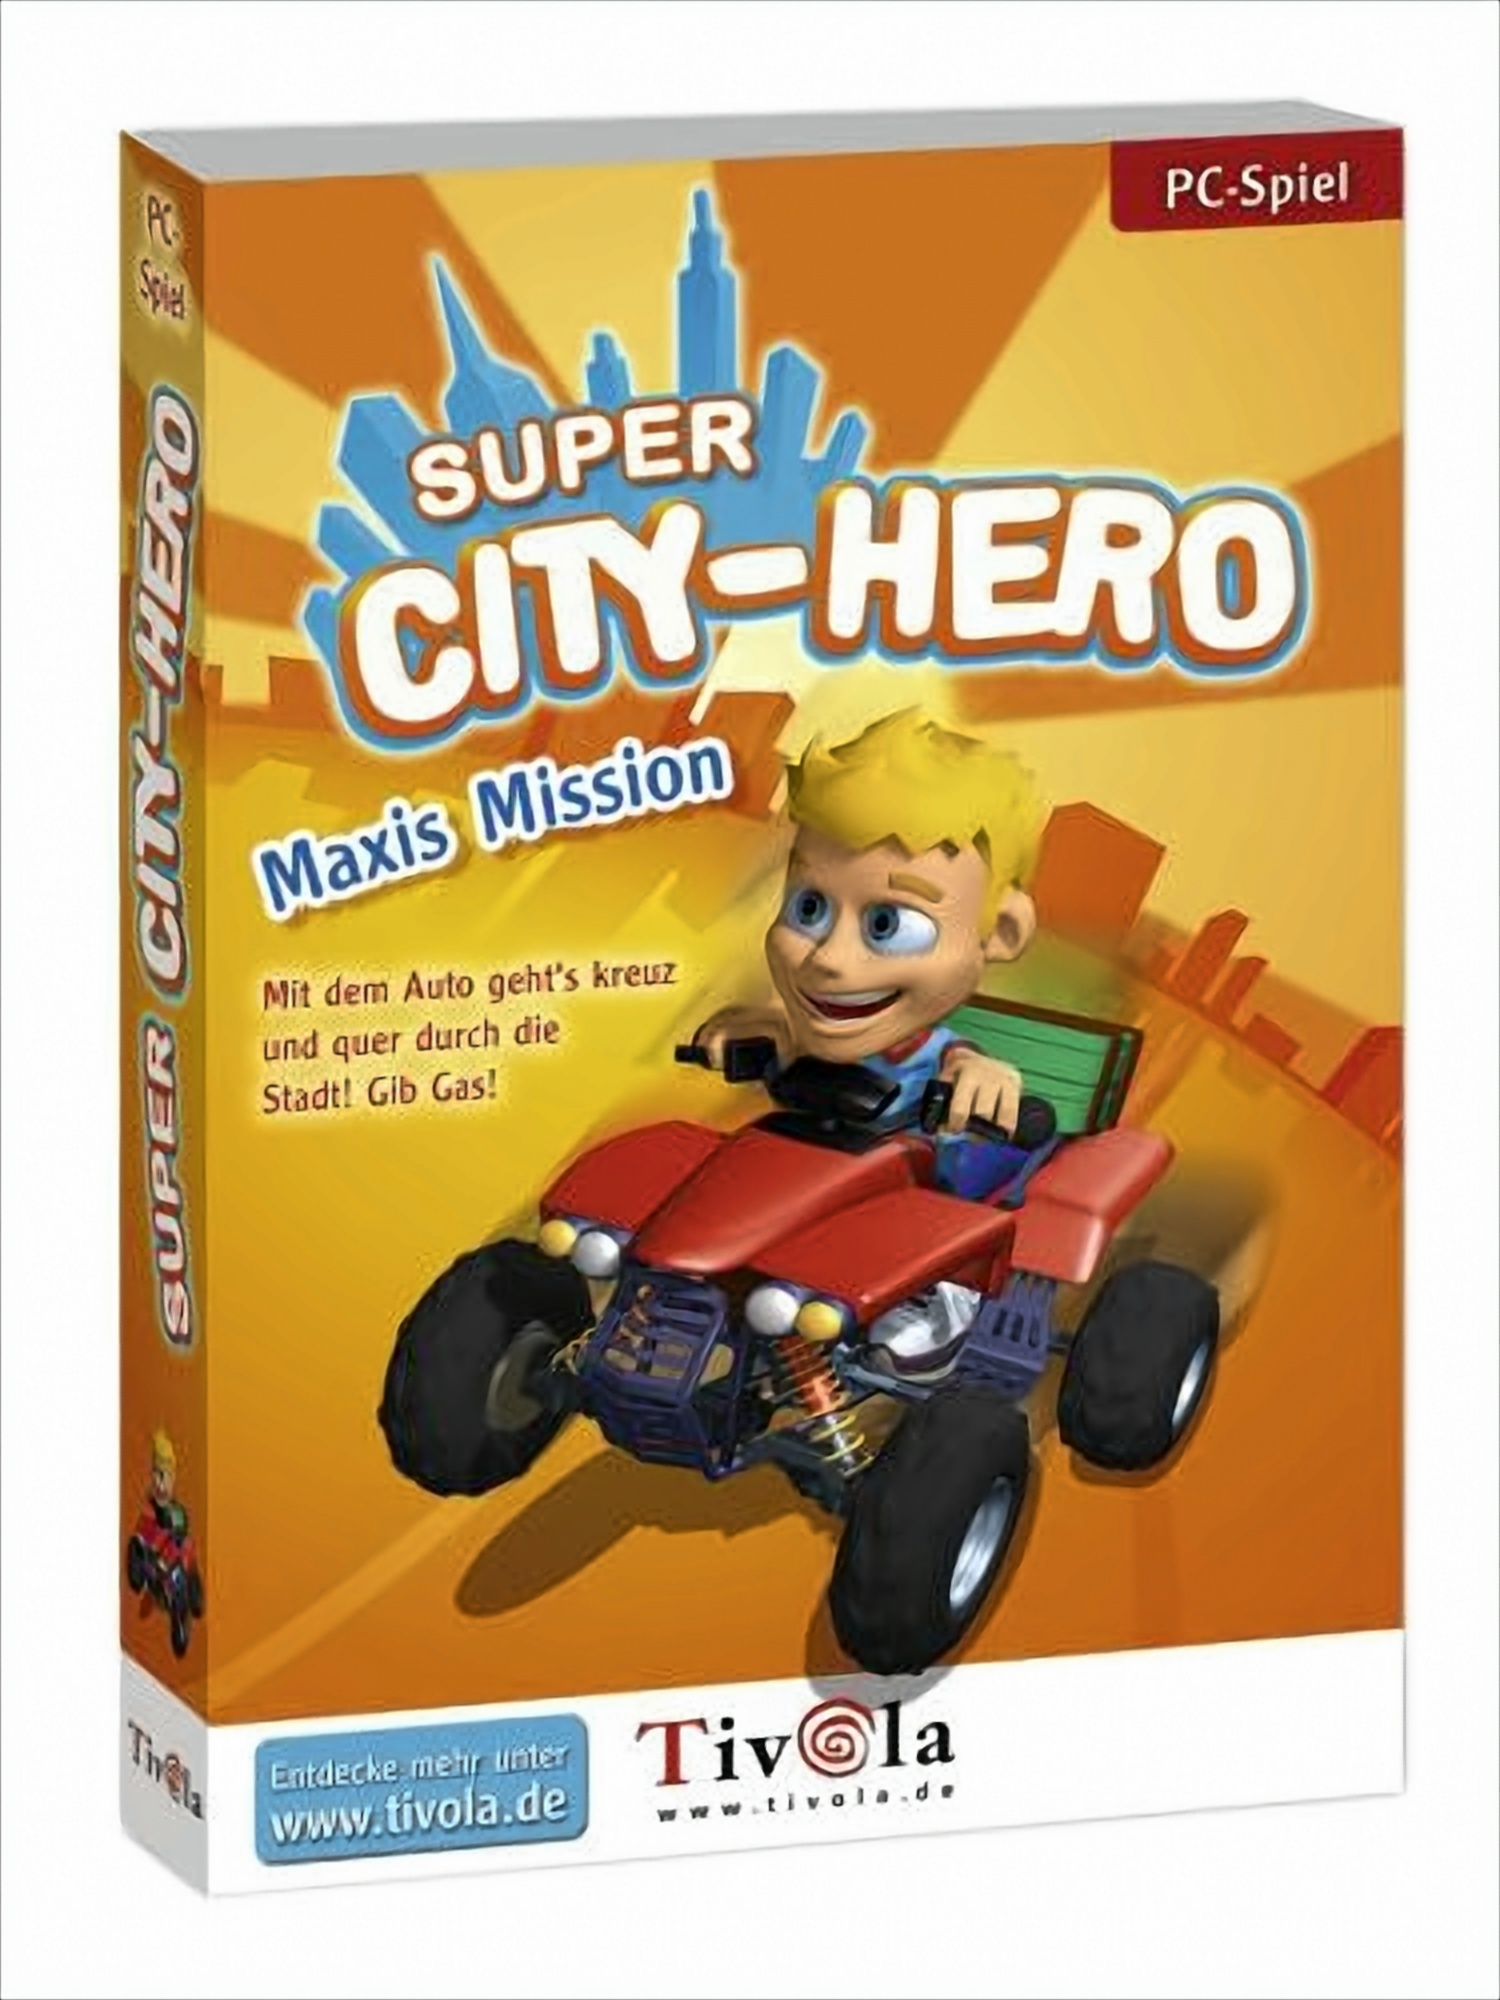 - Mission City Hero: Super [PC] Maxis